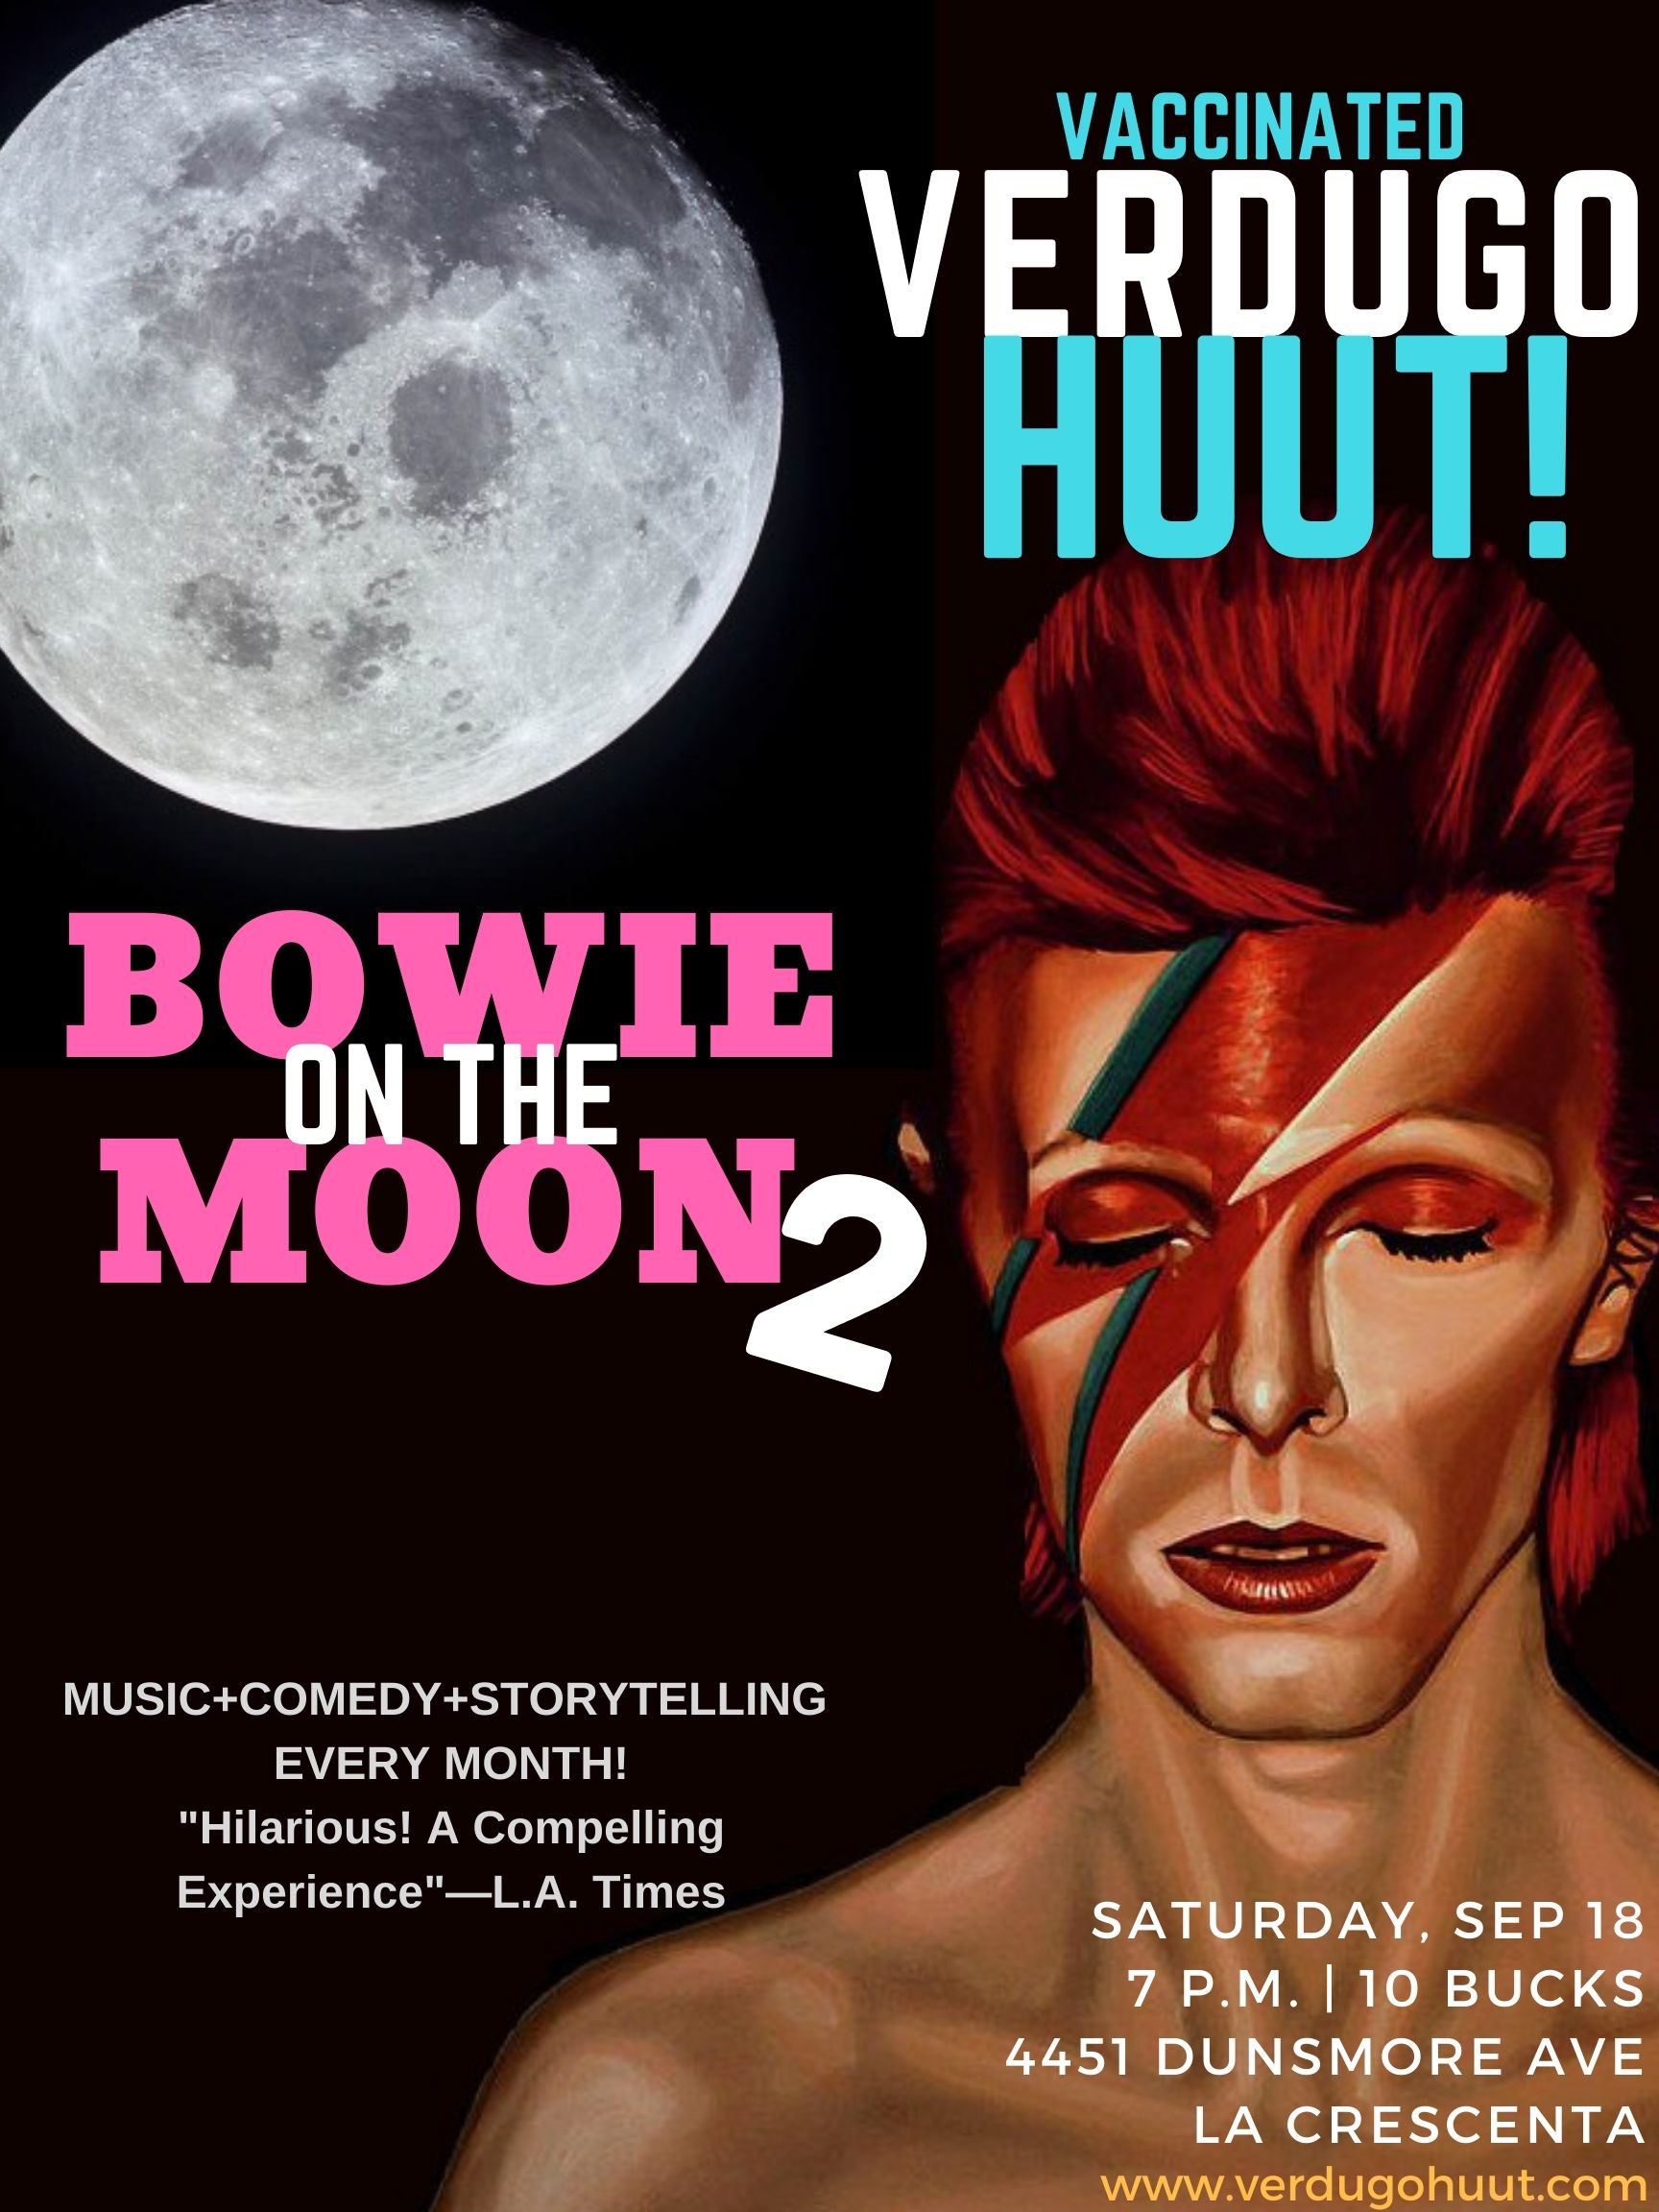 David-Bowie-on-the-Moon-Verdugo_HUUT